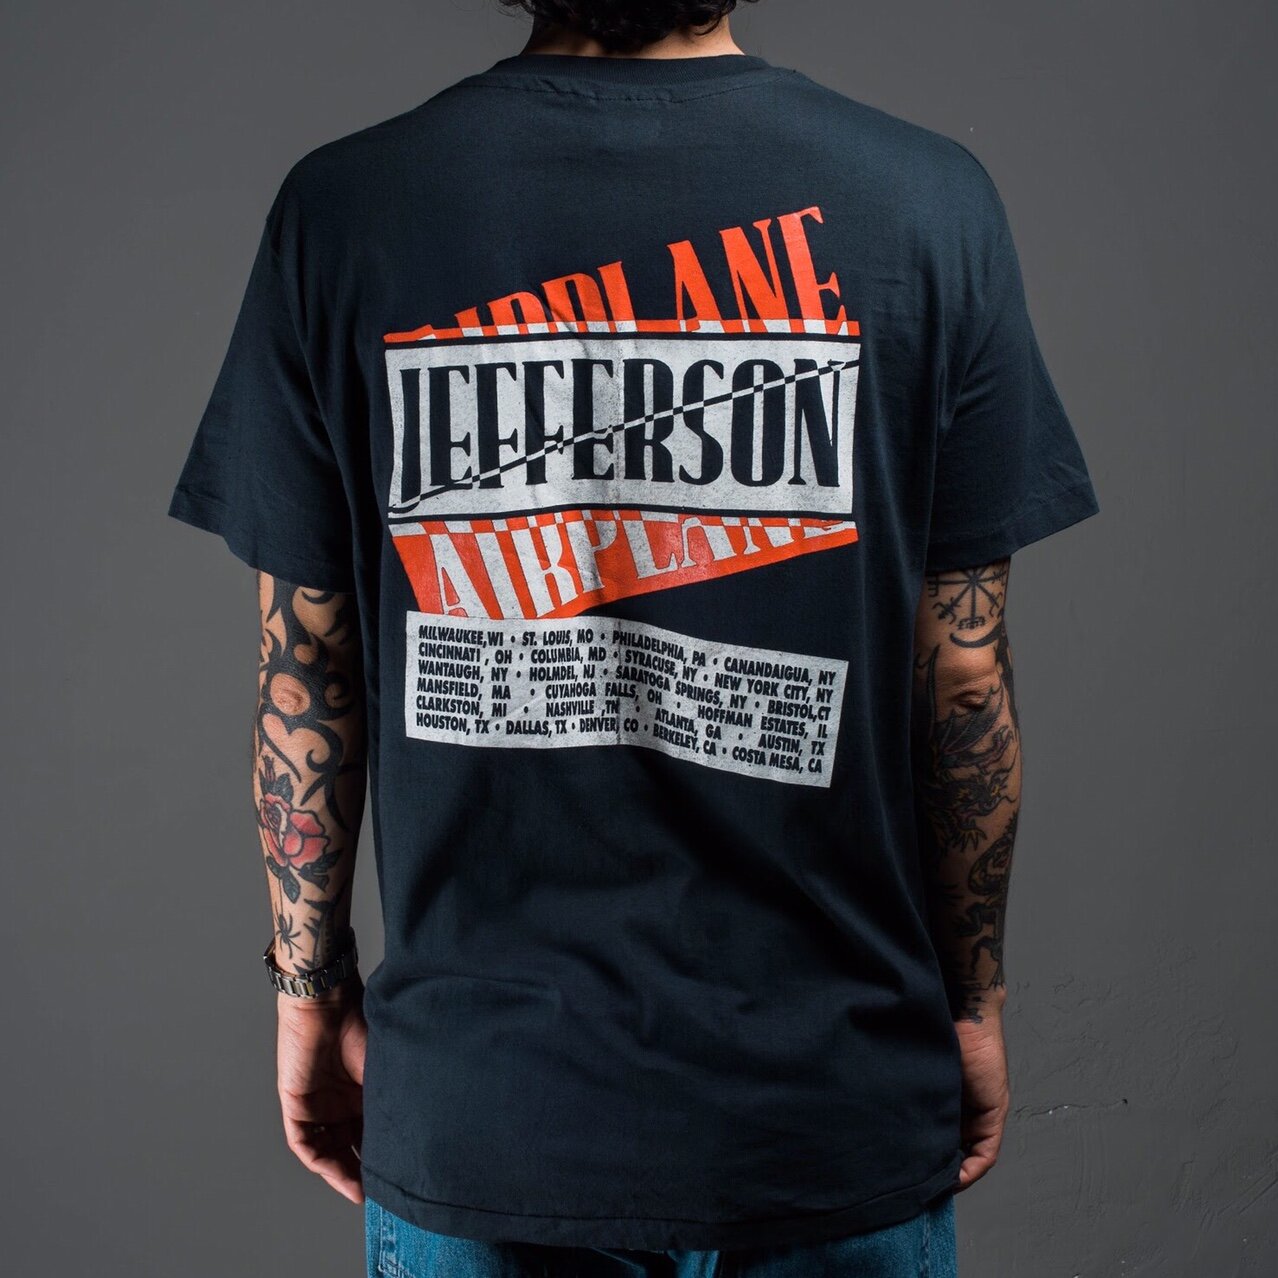 Vintage 80’s Jefferson Airplane Tour T-Shirt